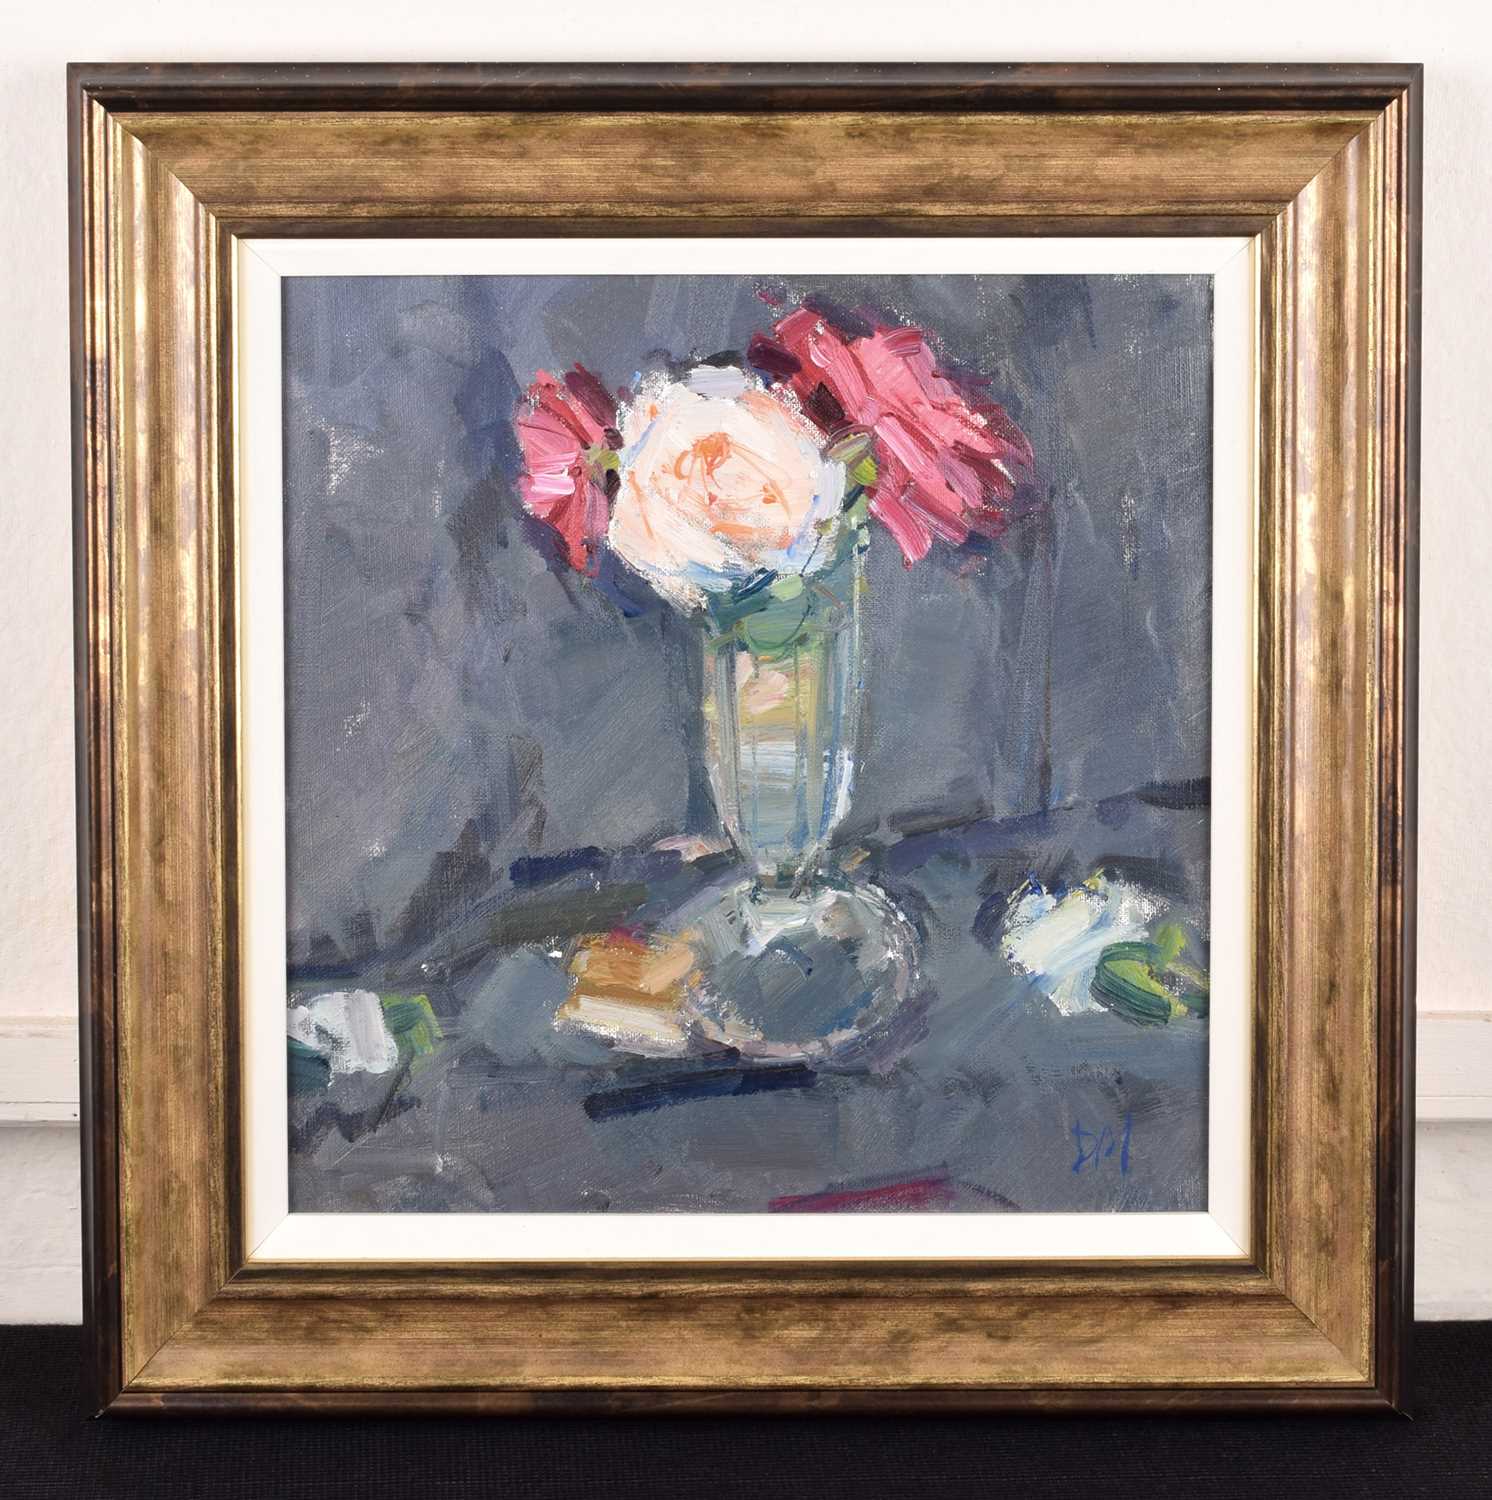 Don McKinlay (British 1929-2017) "Summer Roses" - Image 2 of 2